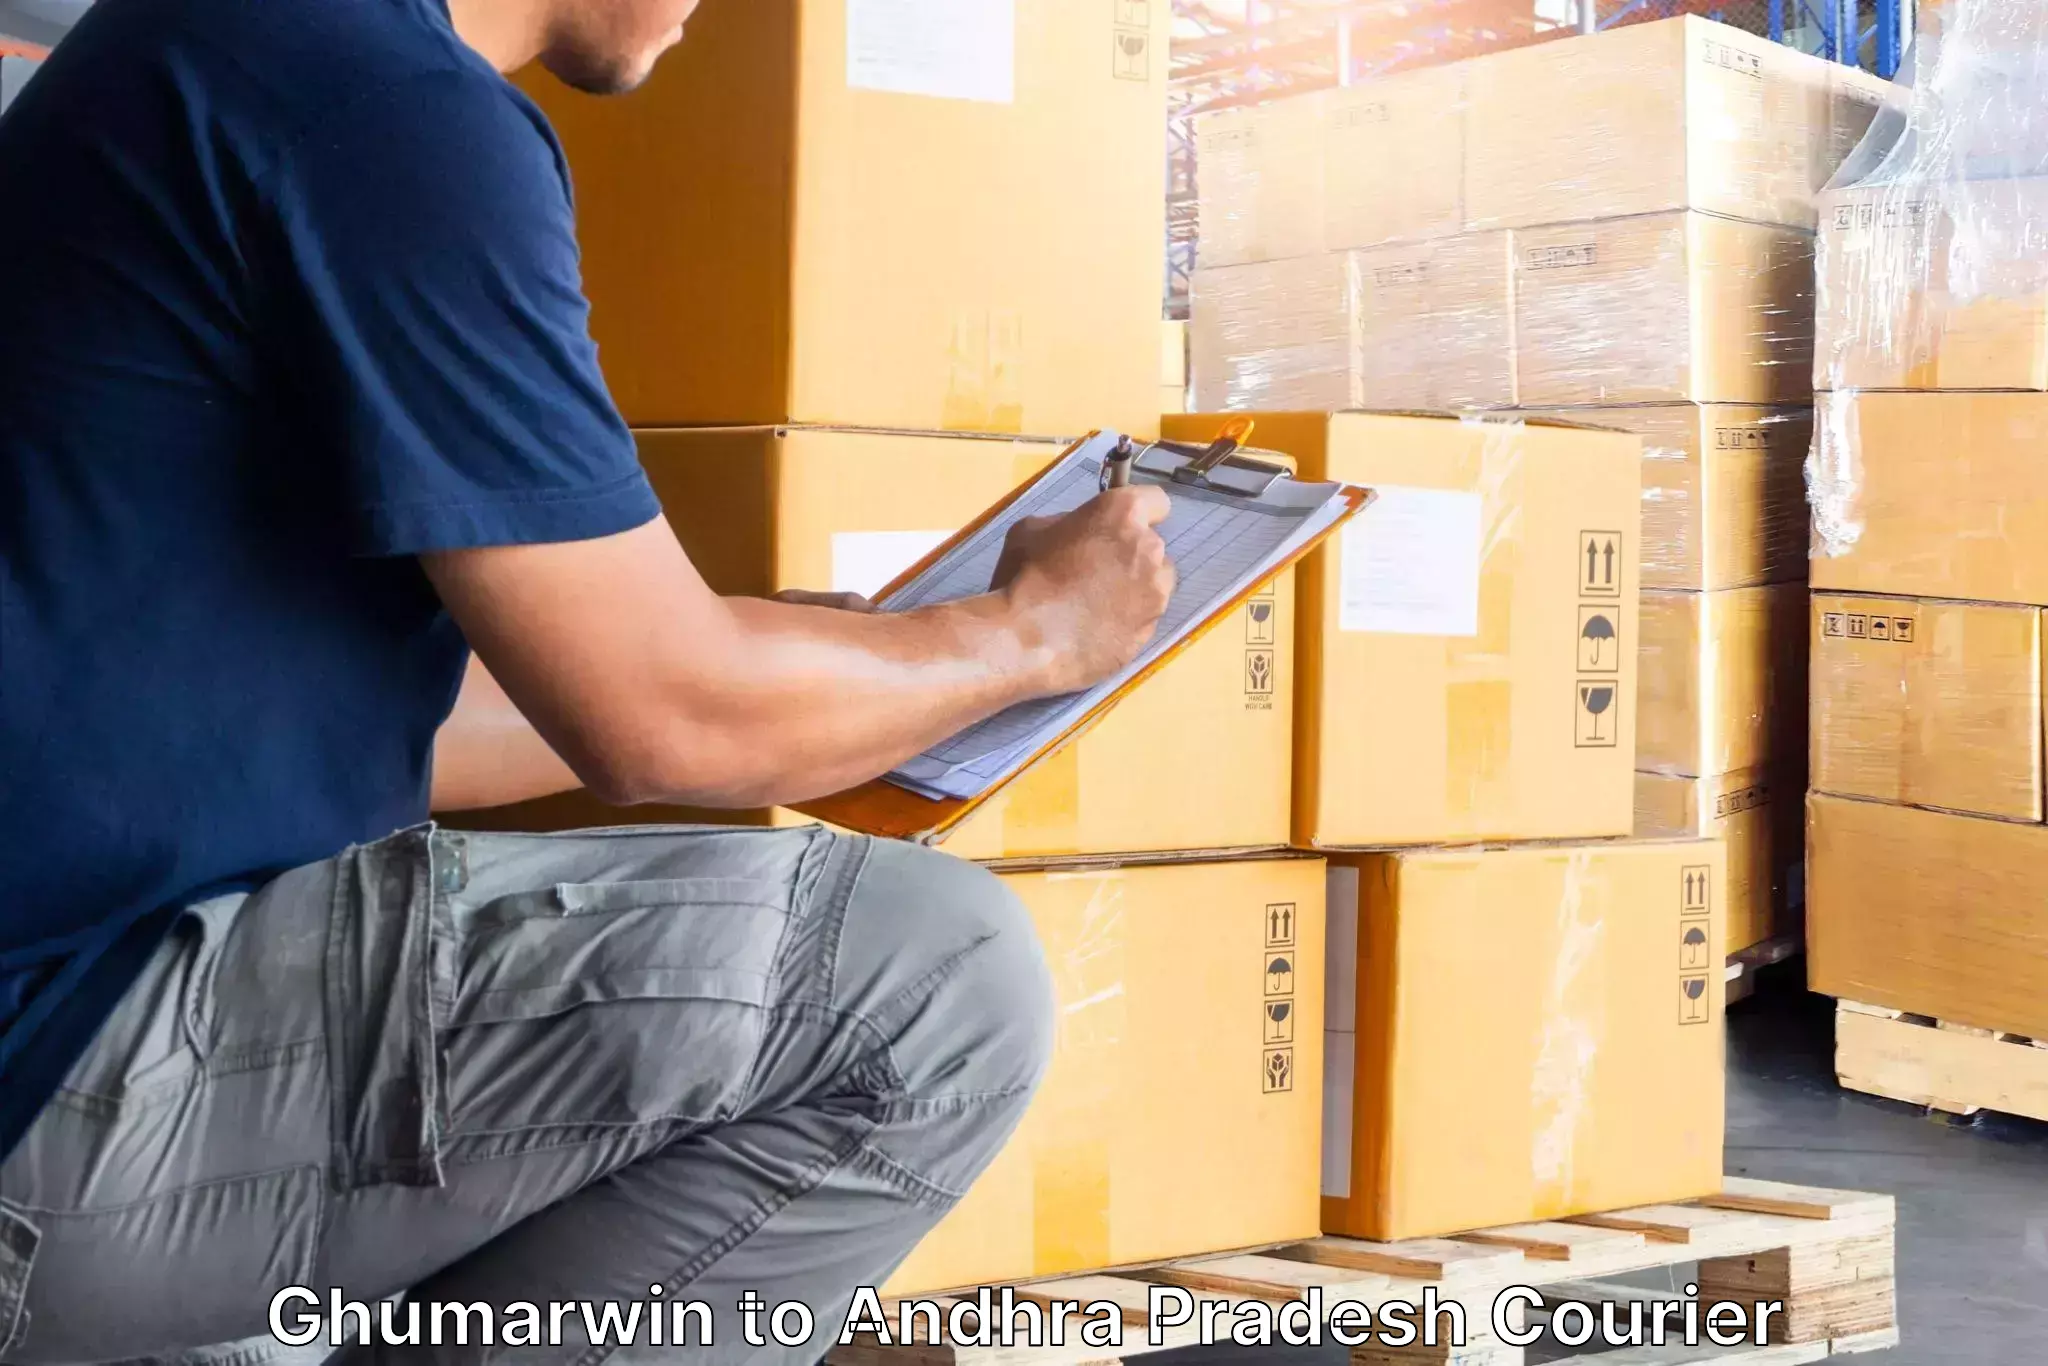 Professional moving company Ghumarwin to Pakala